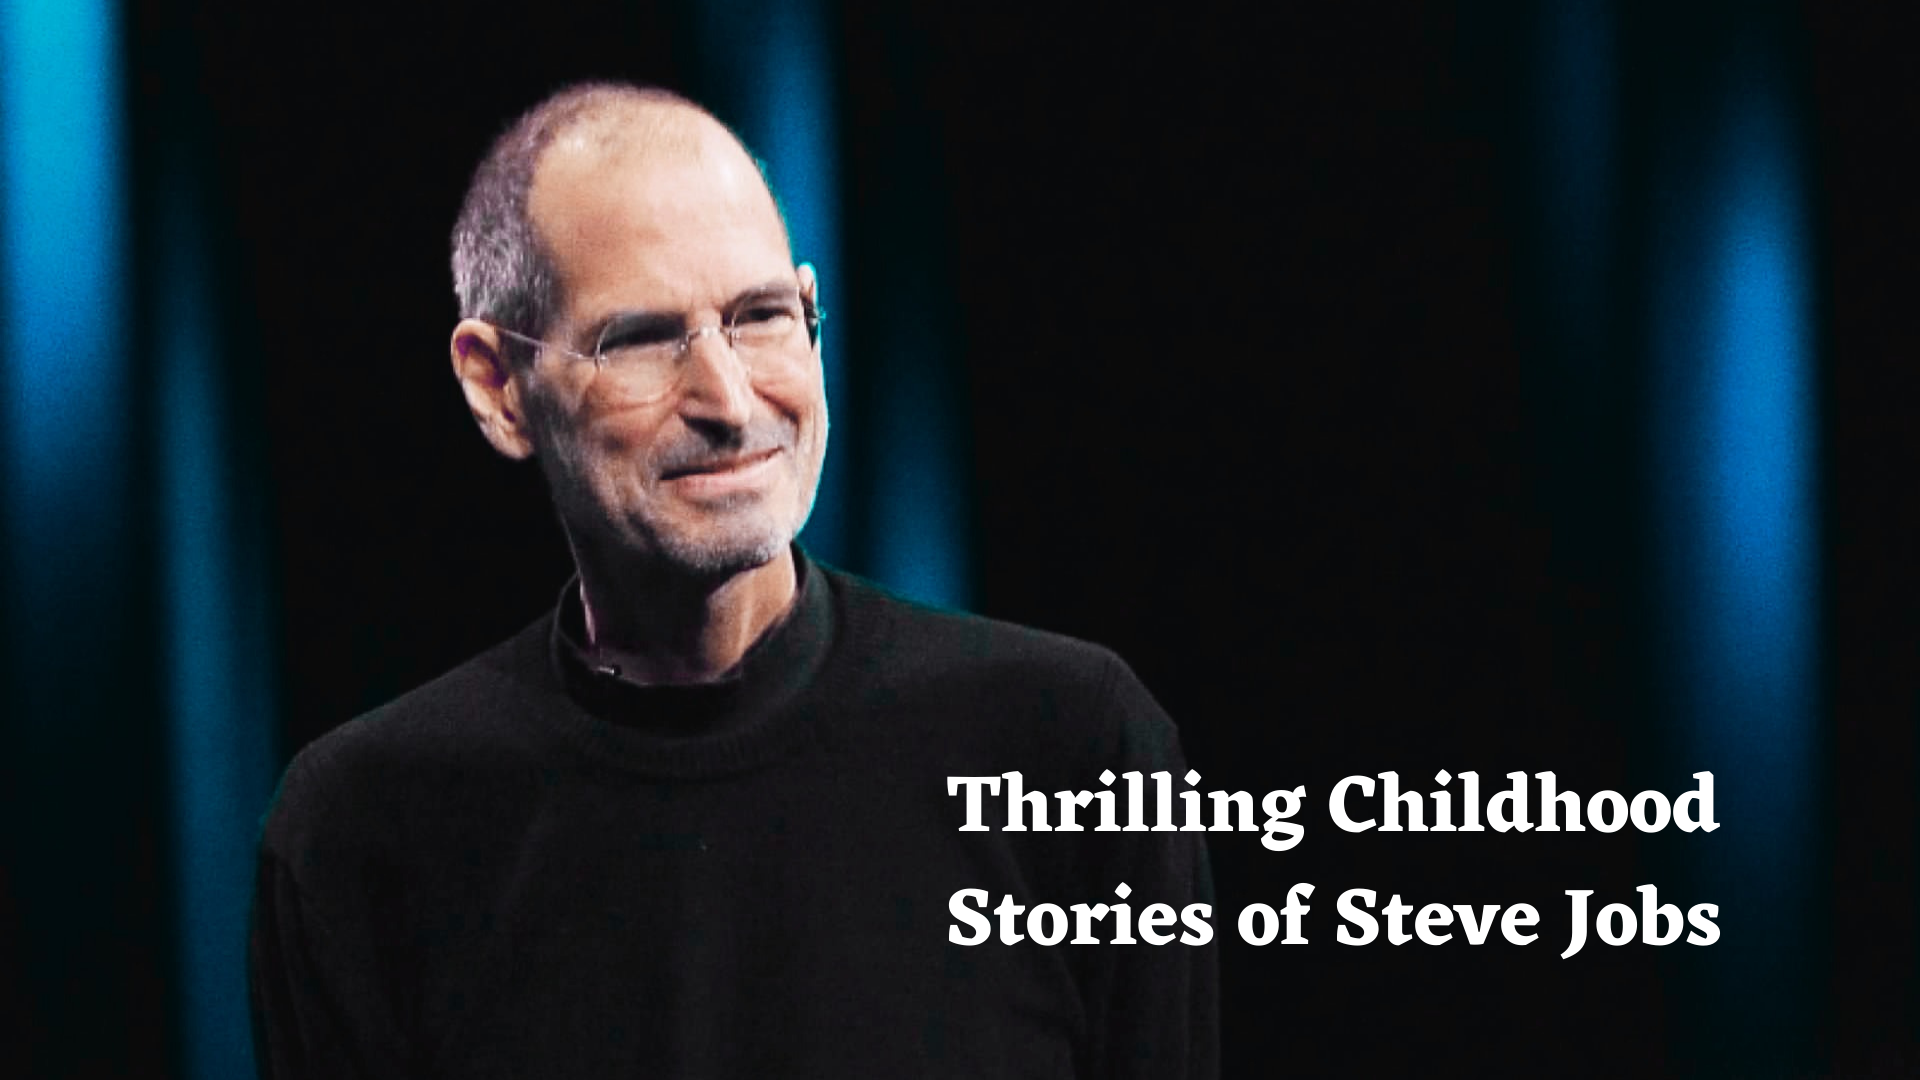 The thrilling childhood stories of Steve Jobs